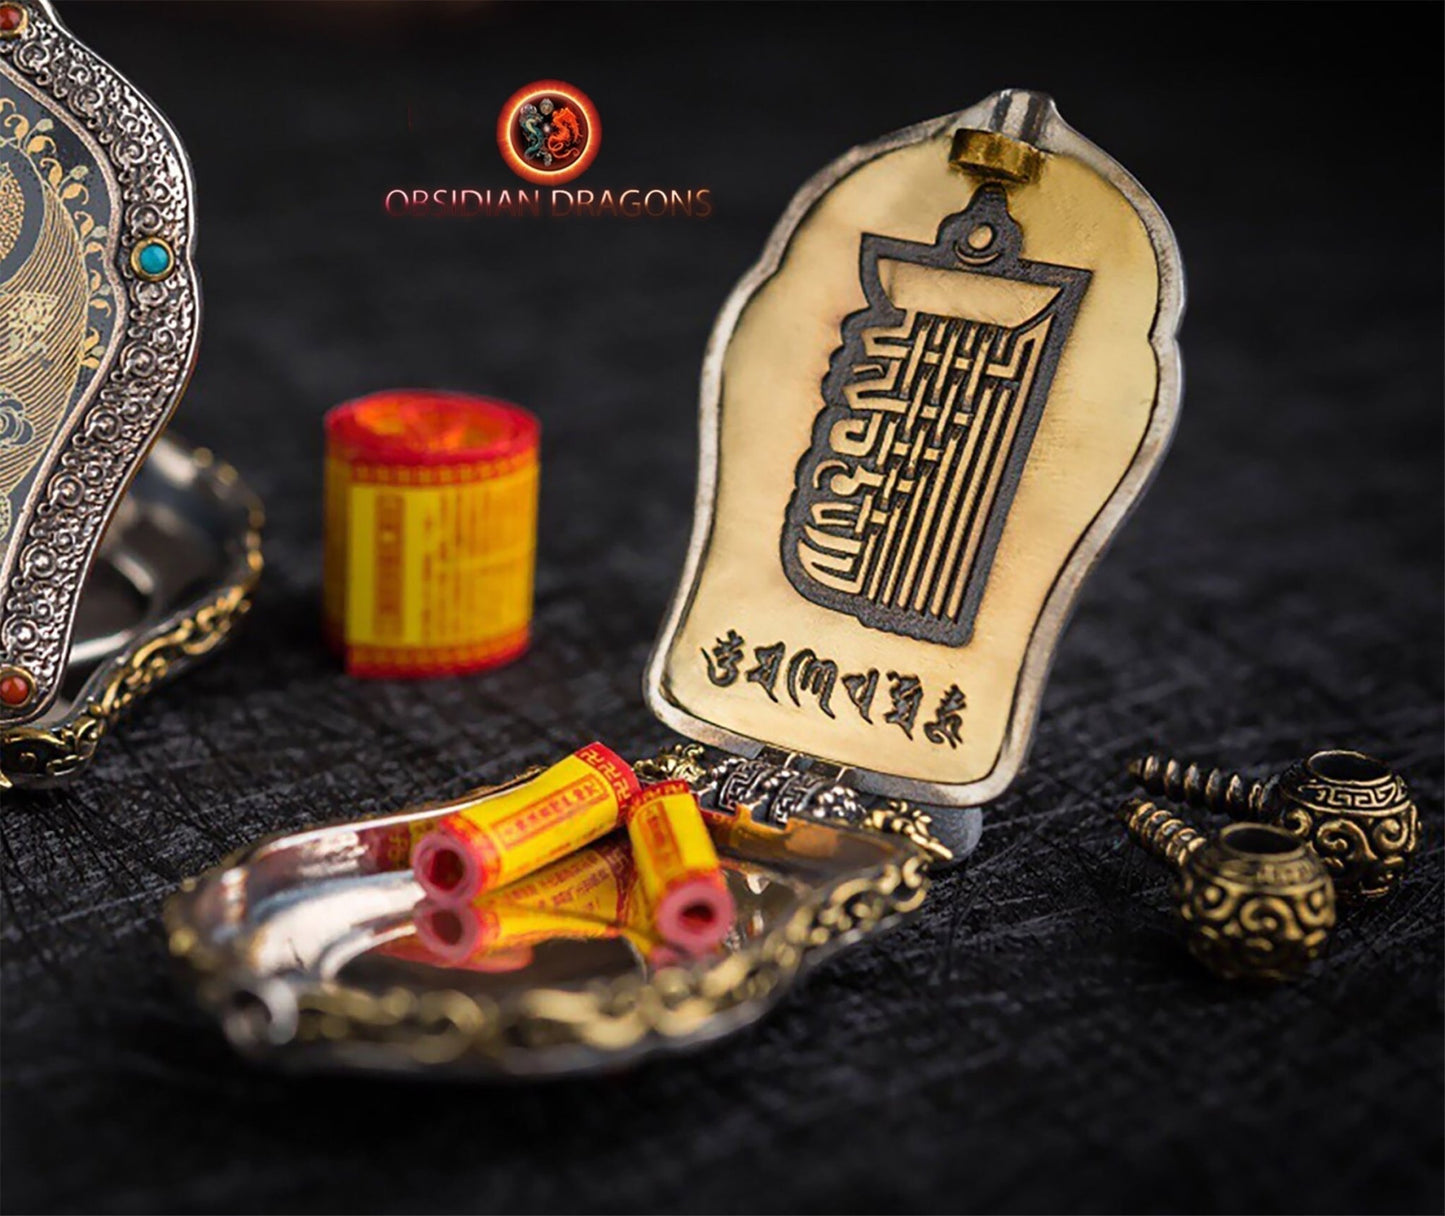 Pendentif Bouddha Acala. Ghau, amulette de protection tibétaine. Véritable tangka artisanal - obsidian dragon